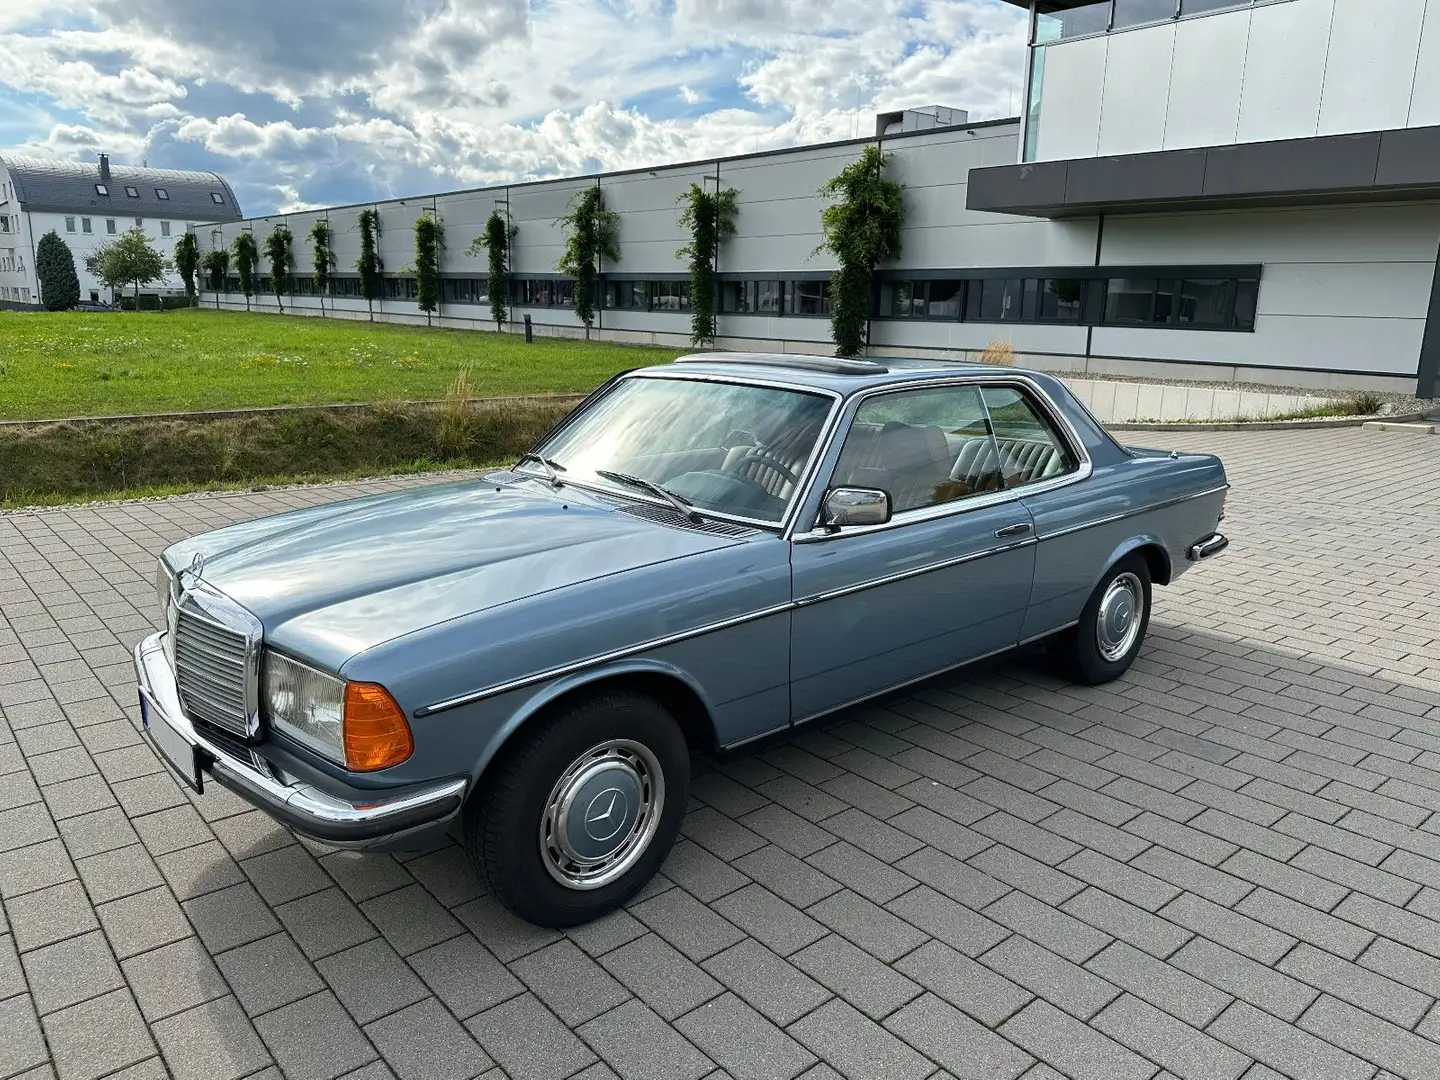 Mercedes-Benz CE 280 Leder Cognac Braun/Schiebedach/Original - 1